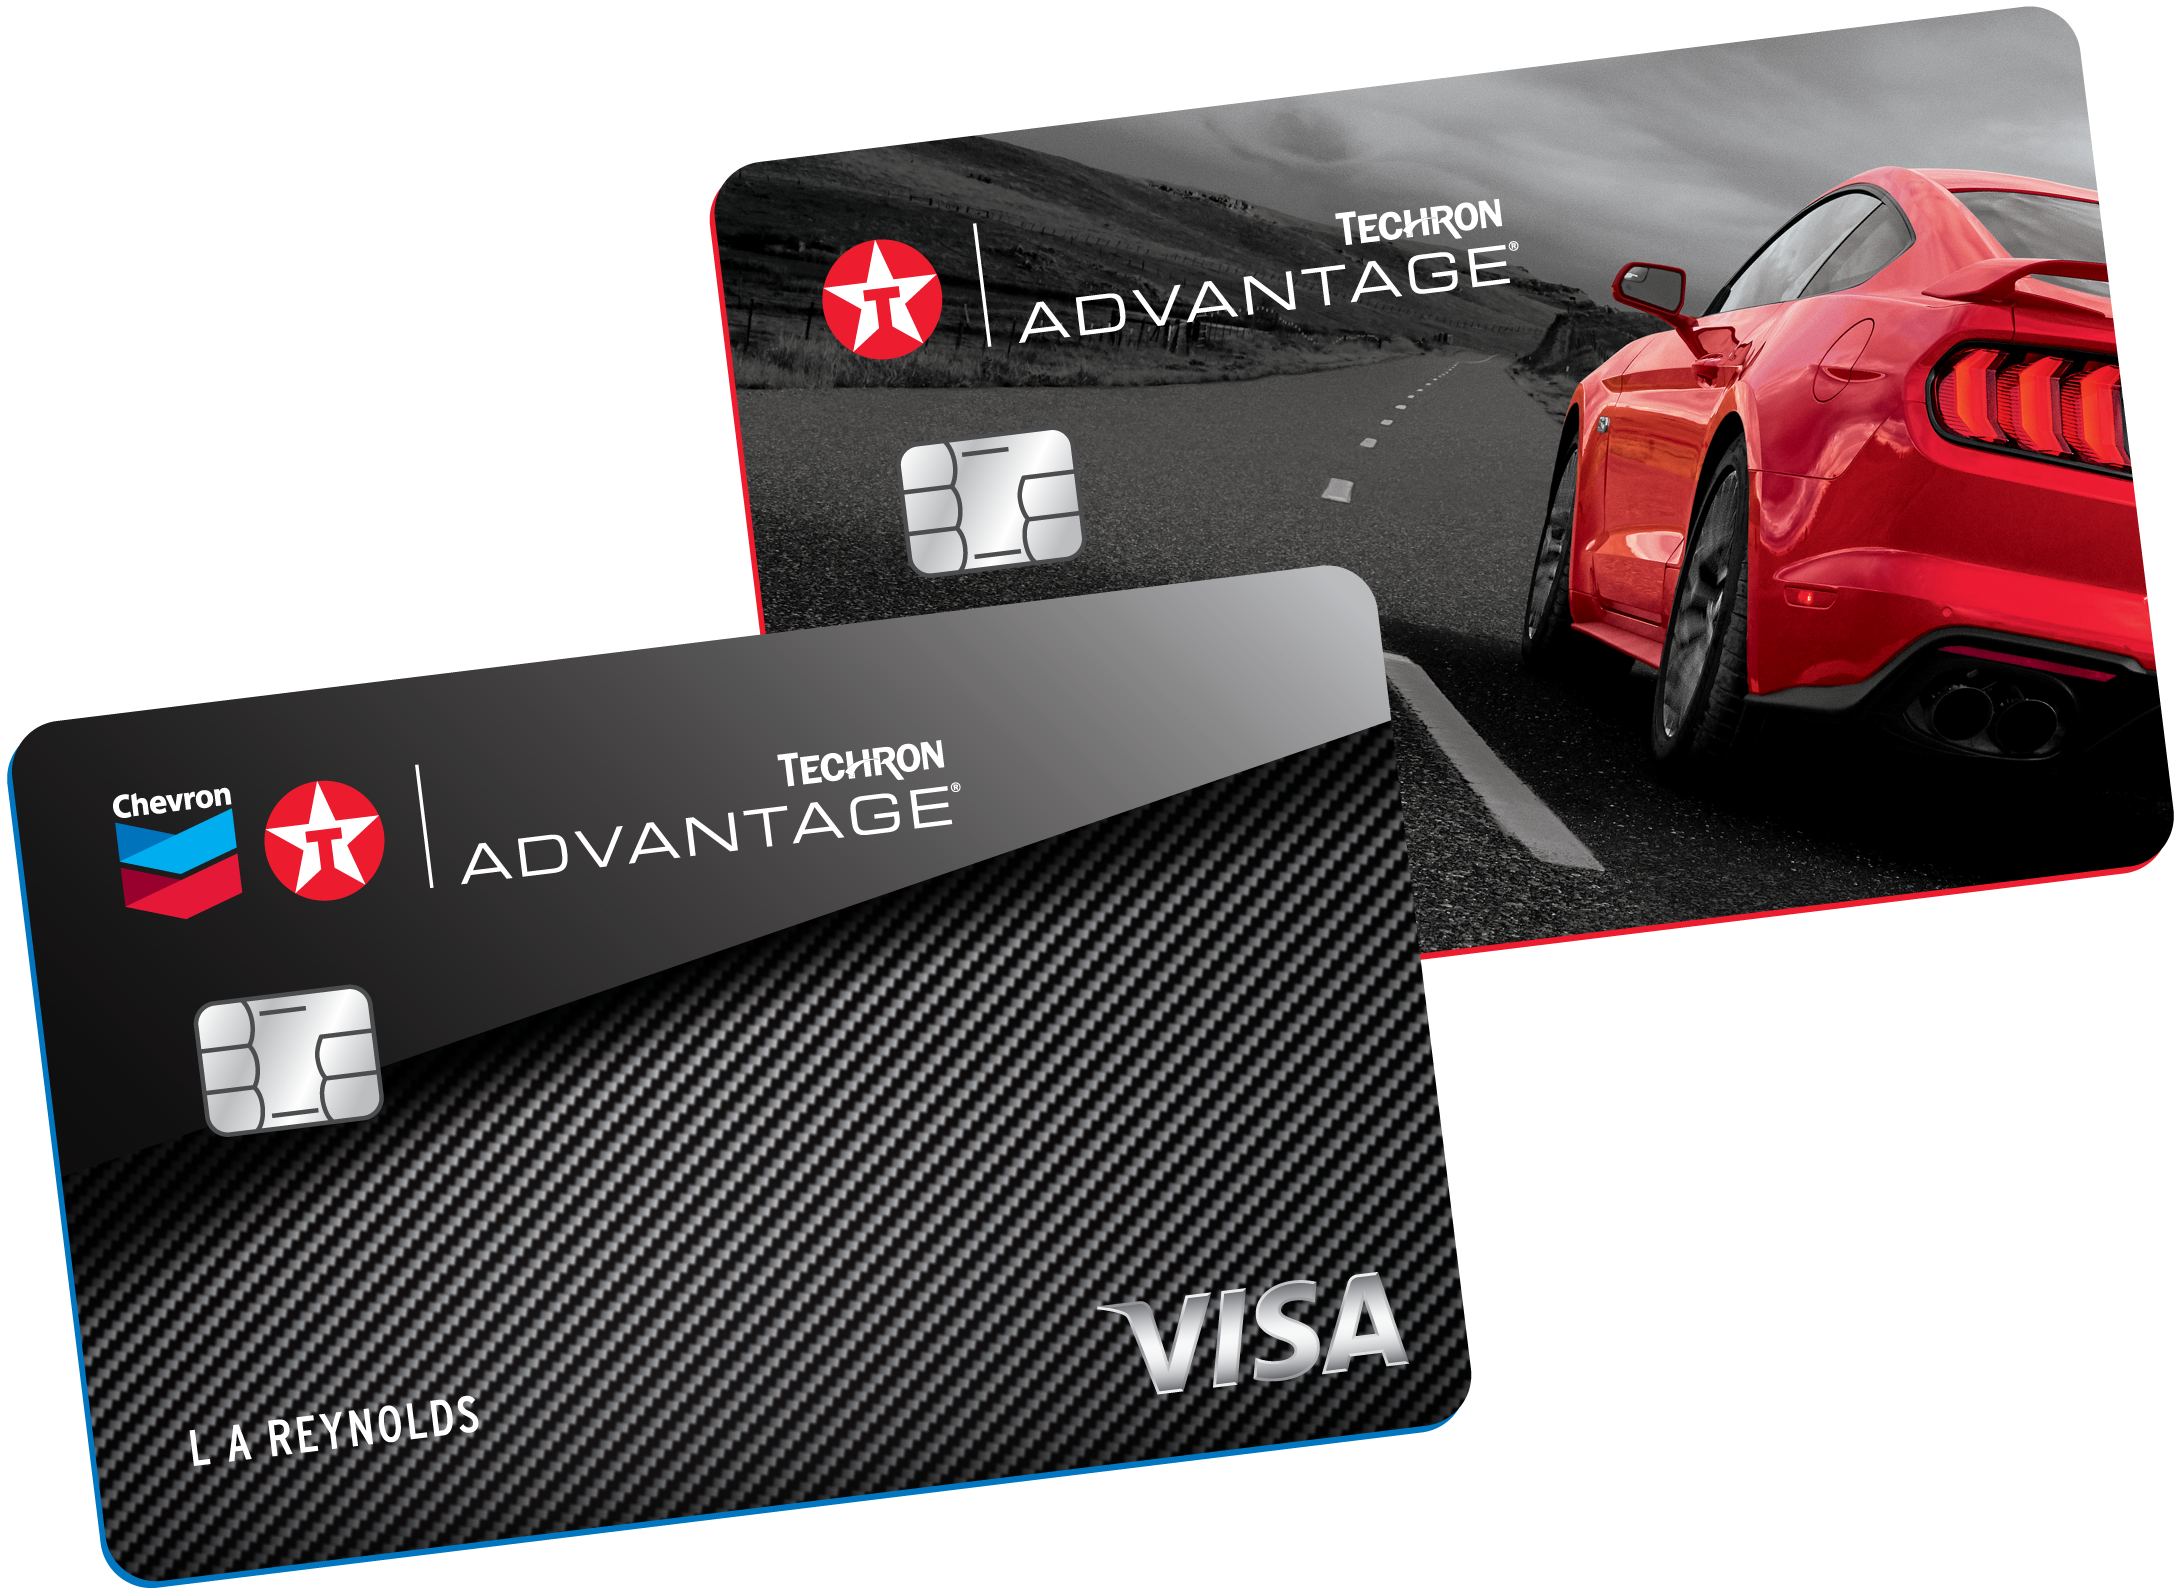 Techron Advantage credit cards